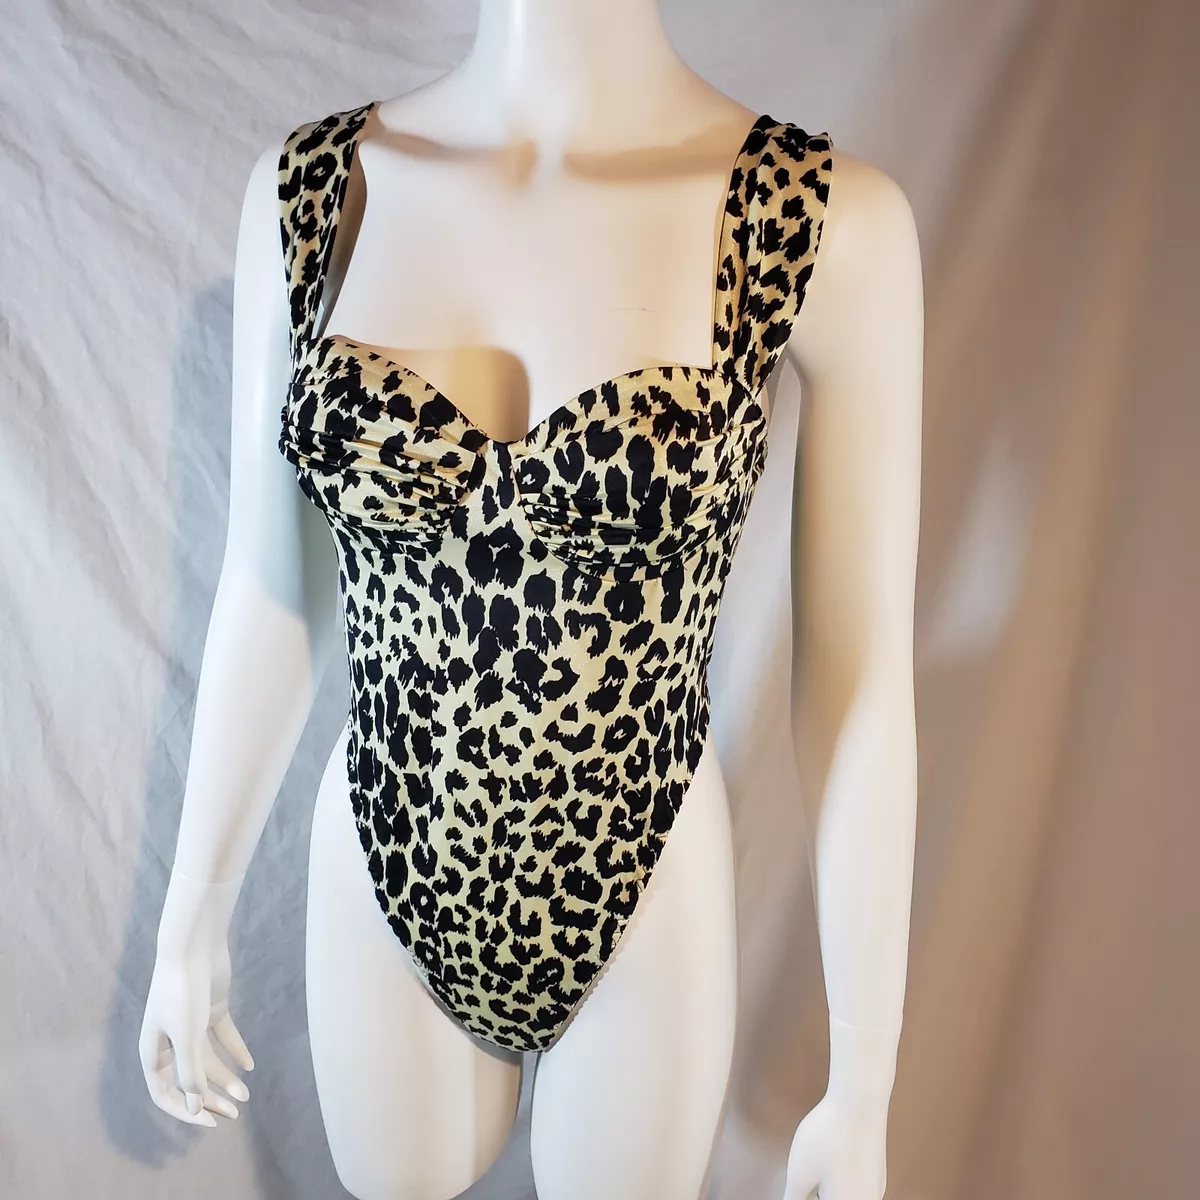 Victoria's Secret Large Satin String Thong Bodysuit Teddy Black White  Leopard